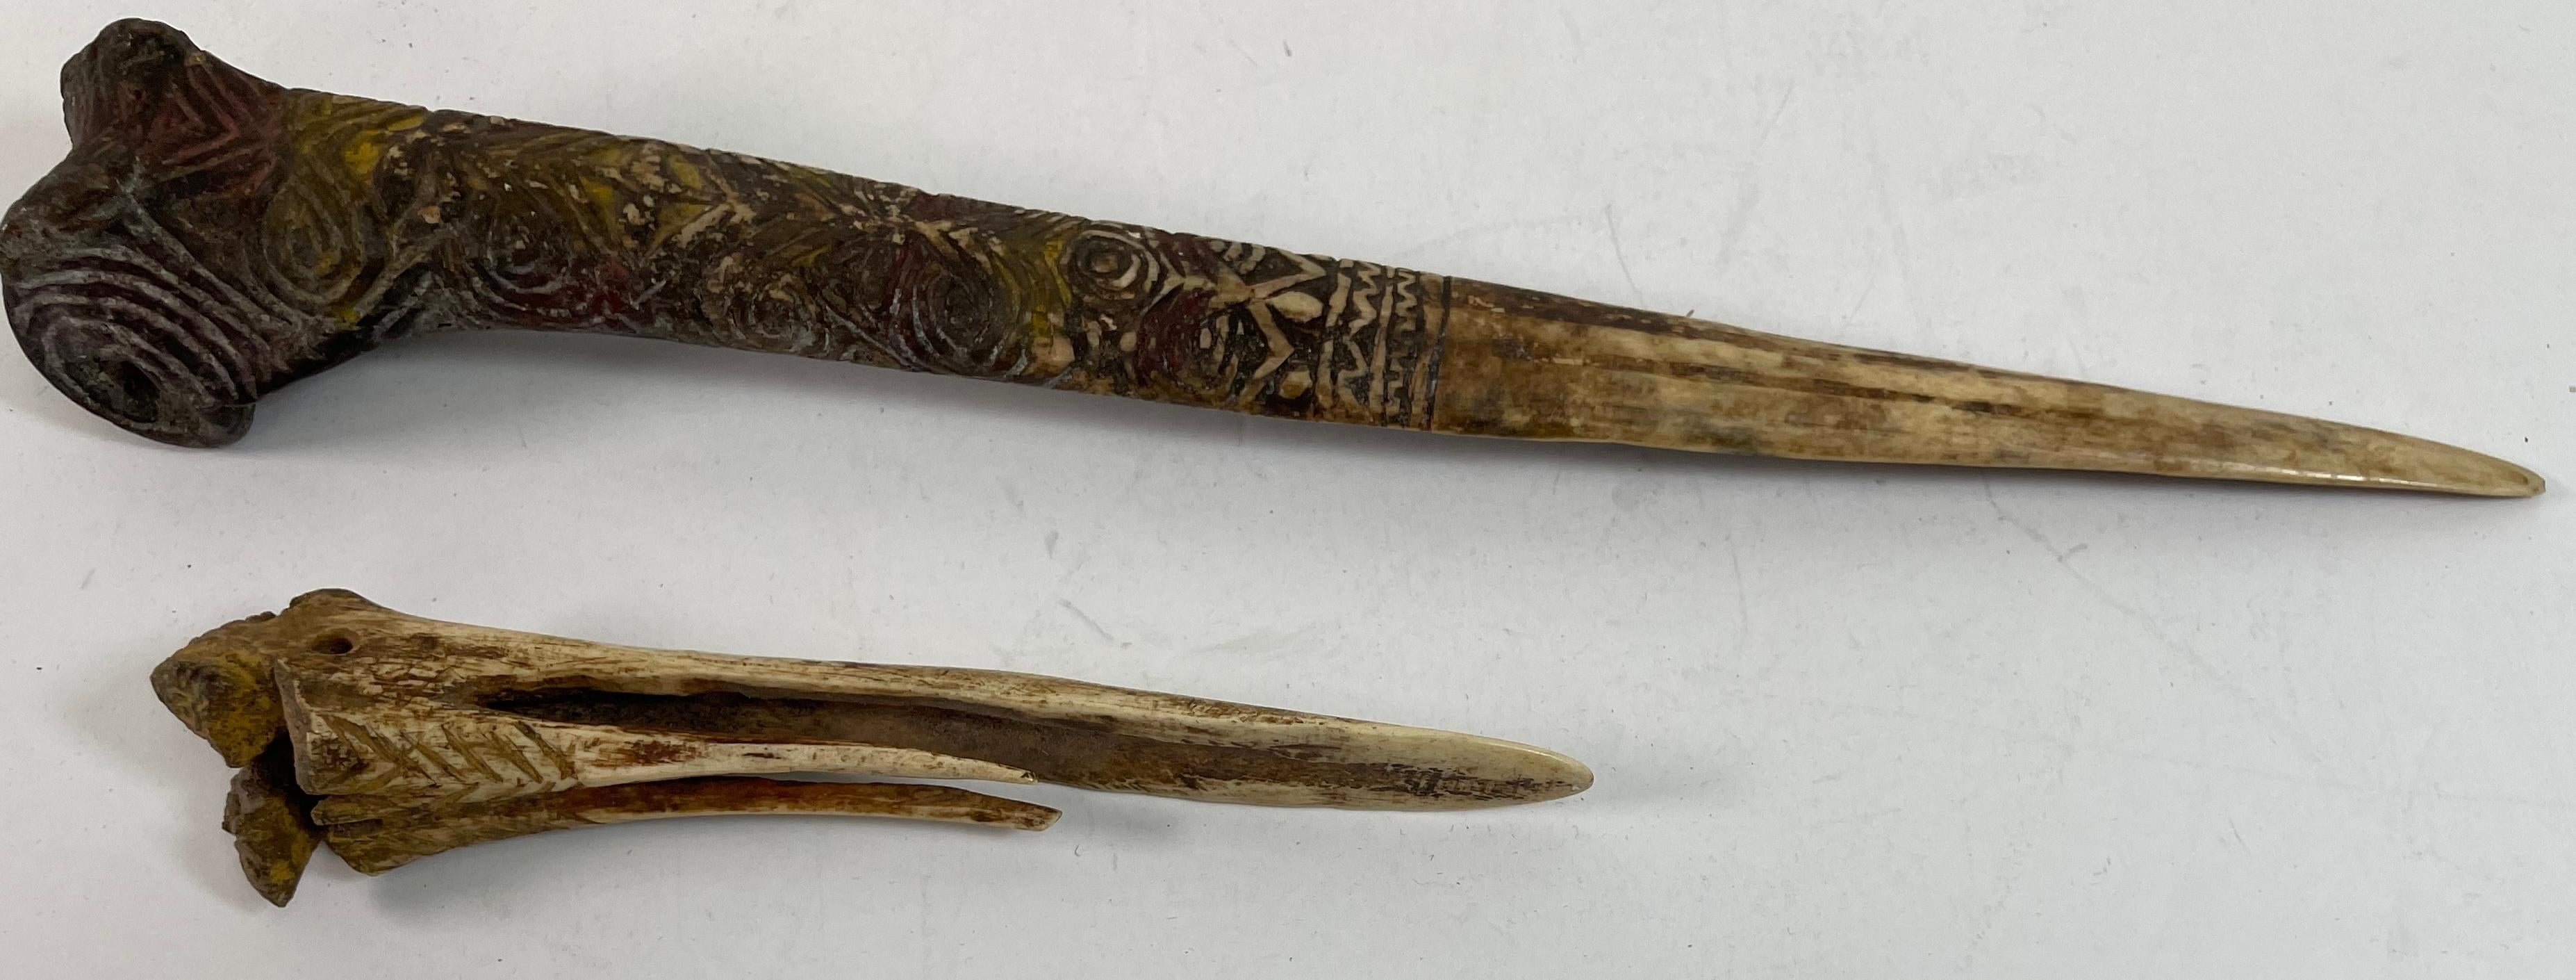 Antique Ethnic Artifact Sepik River Cassowary Bone from Papua New Guinea For Sale 14